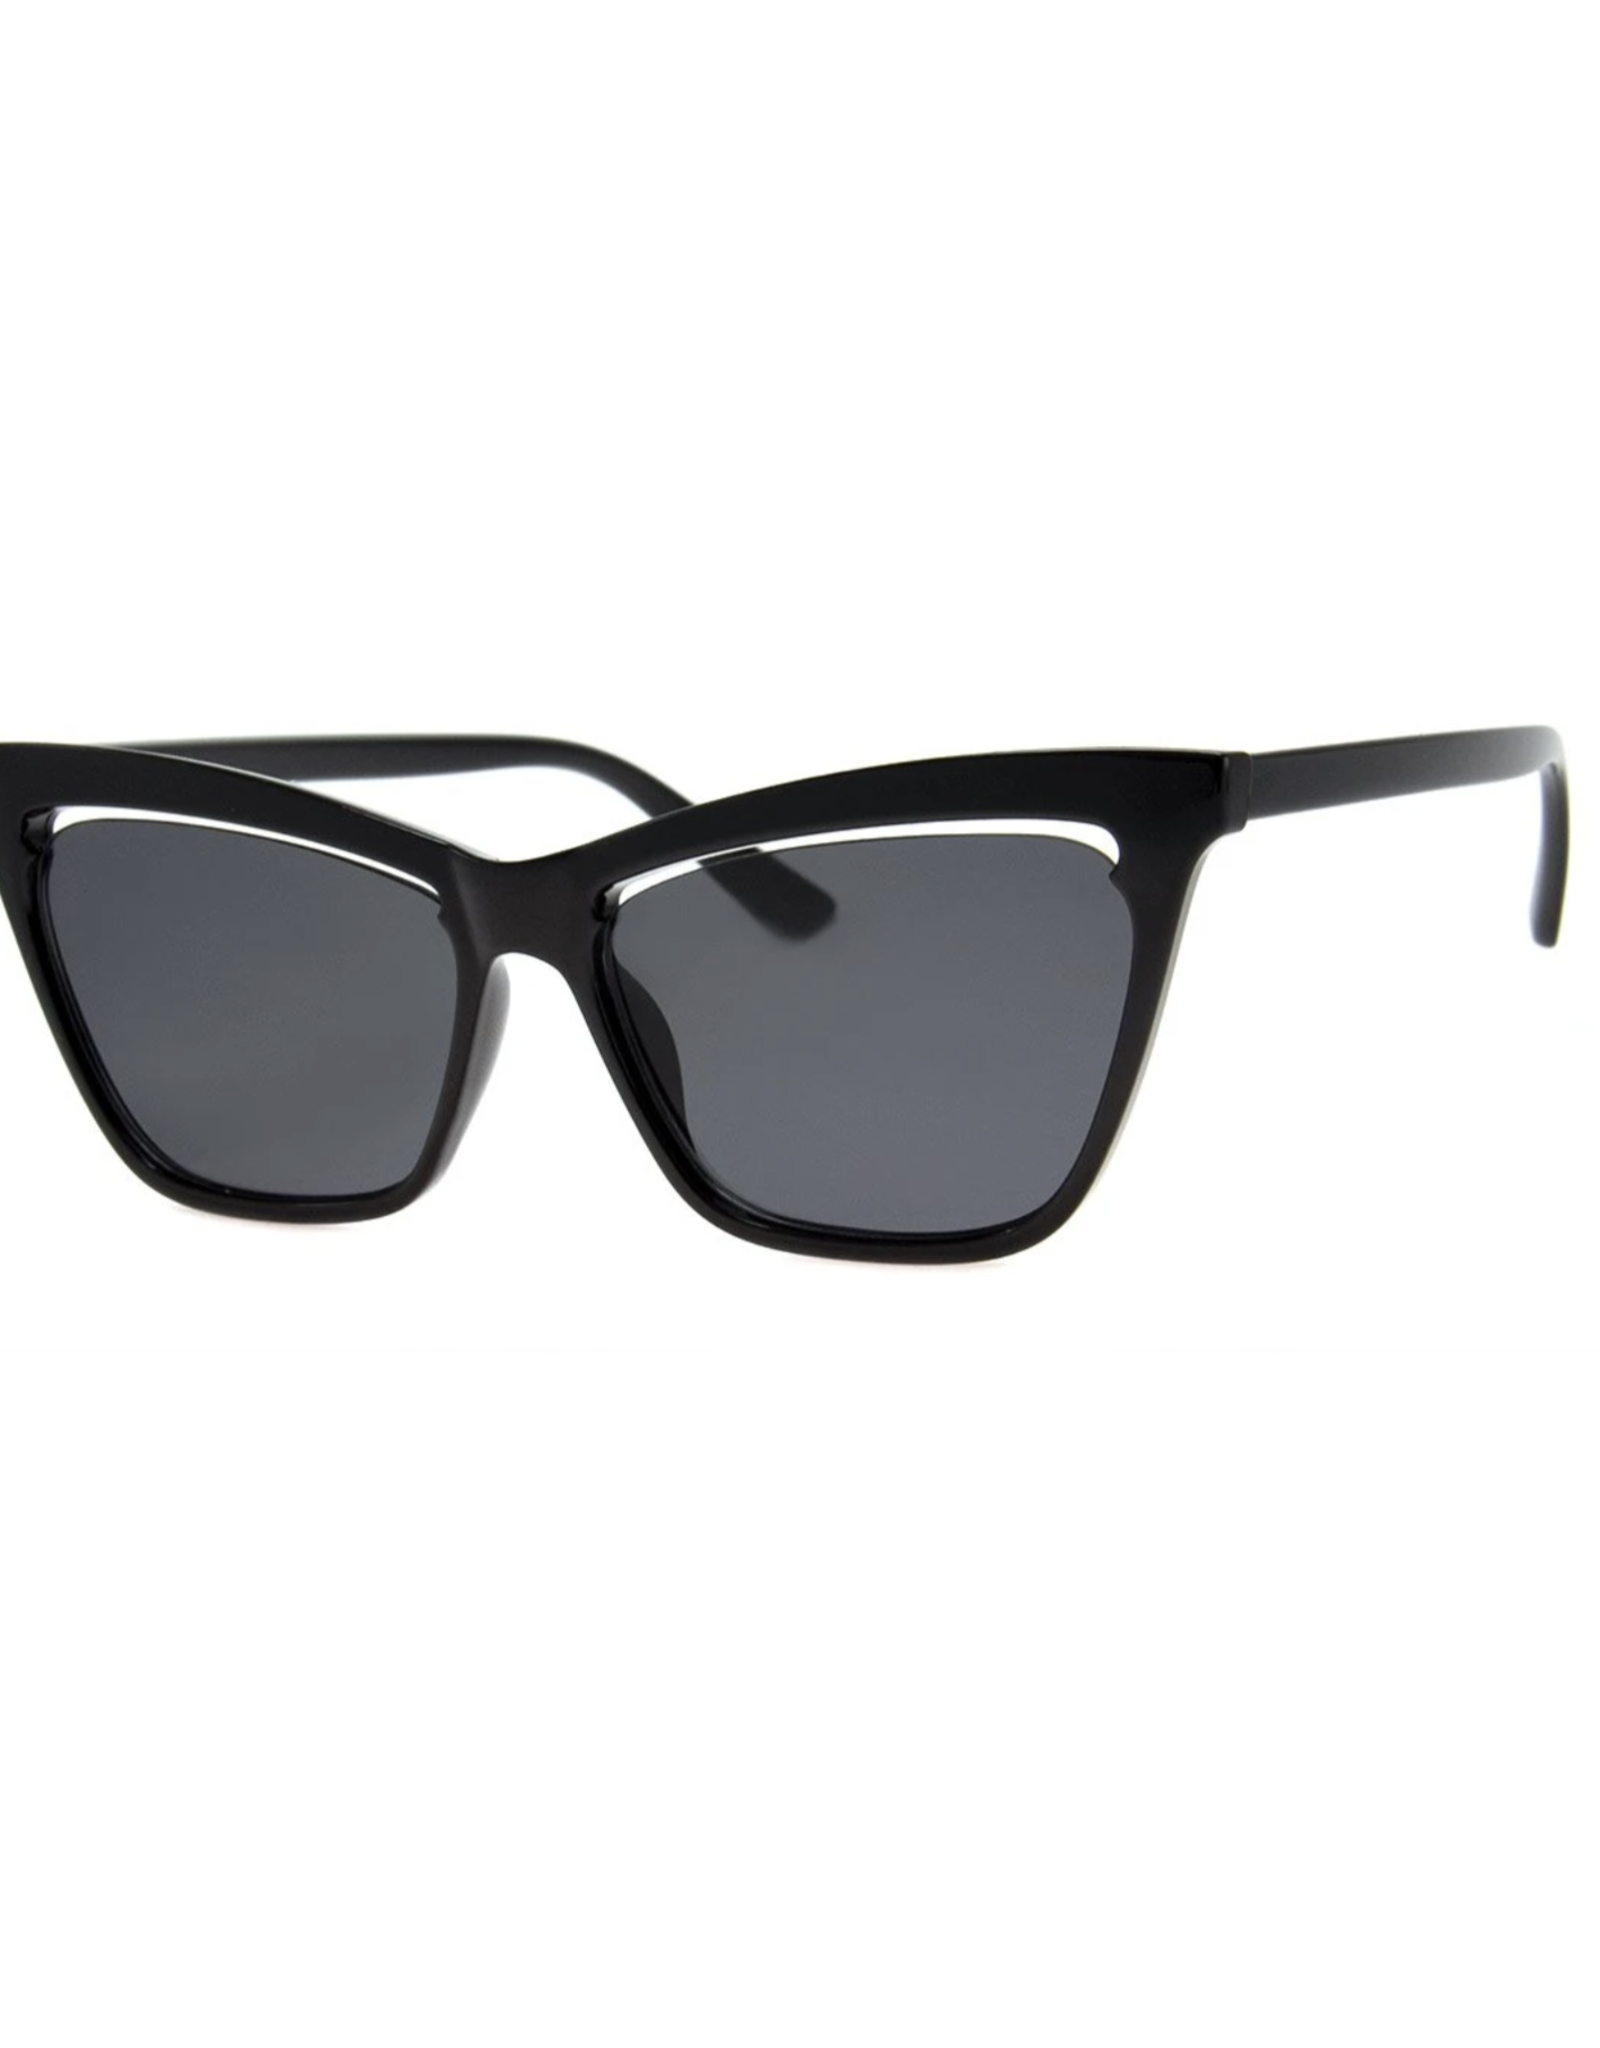 AJ Morgan Tippy Black Sunglasses, AJ Morgan